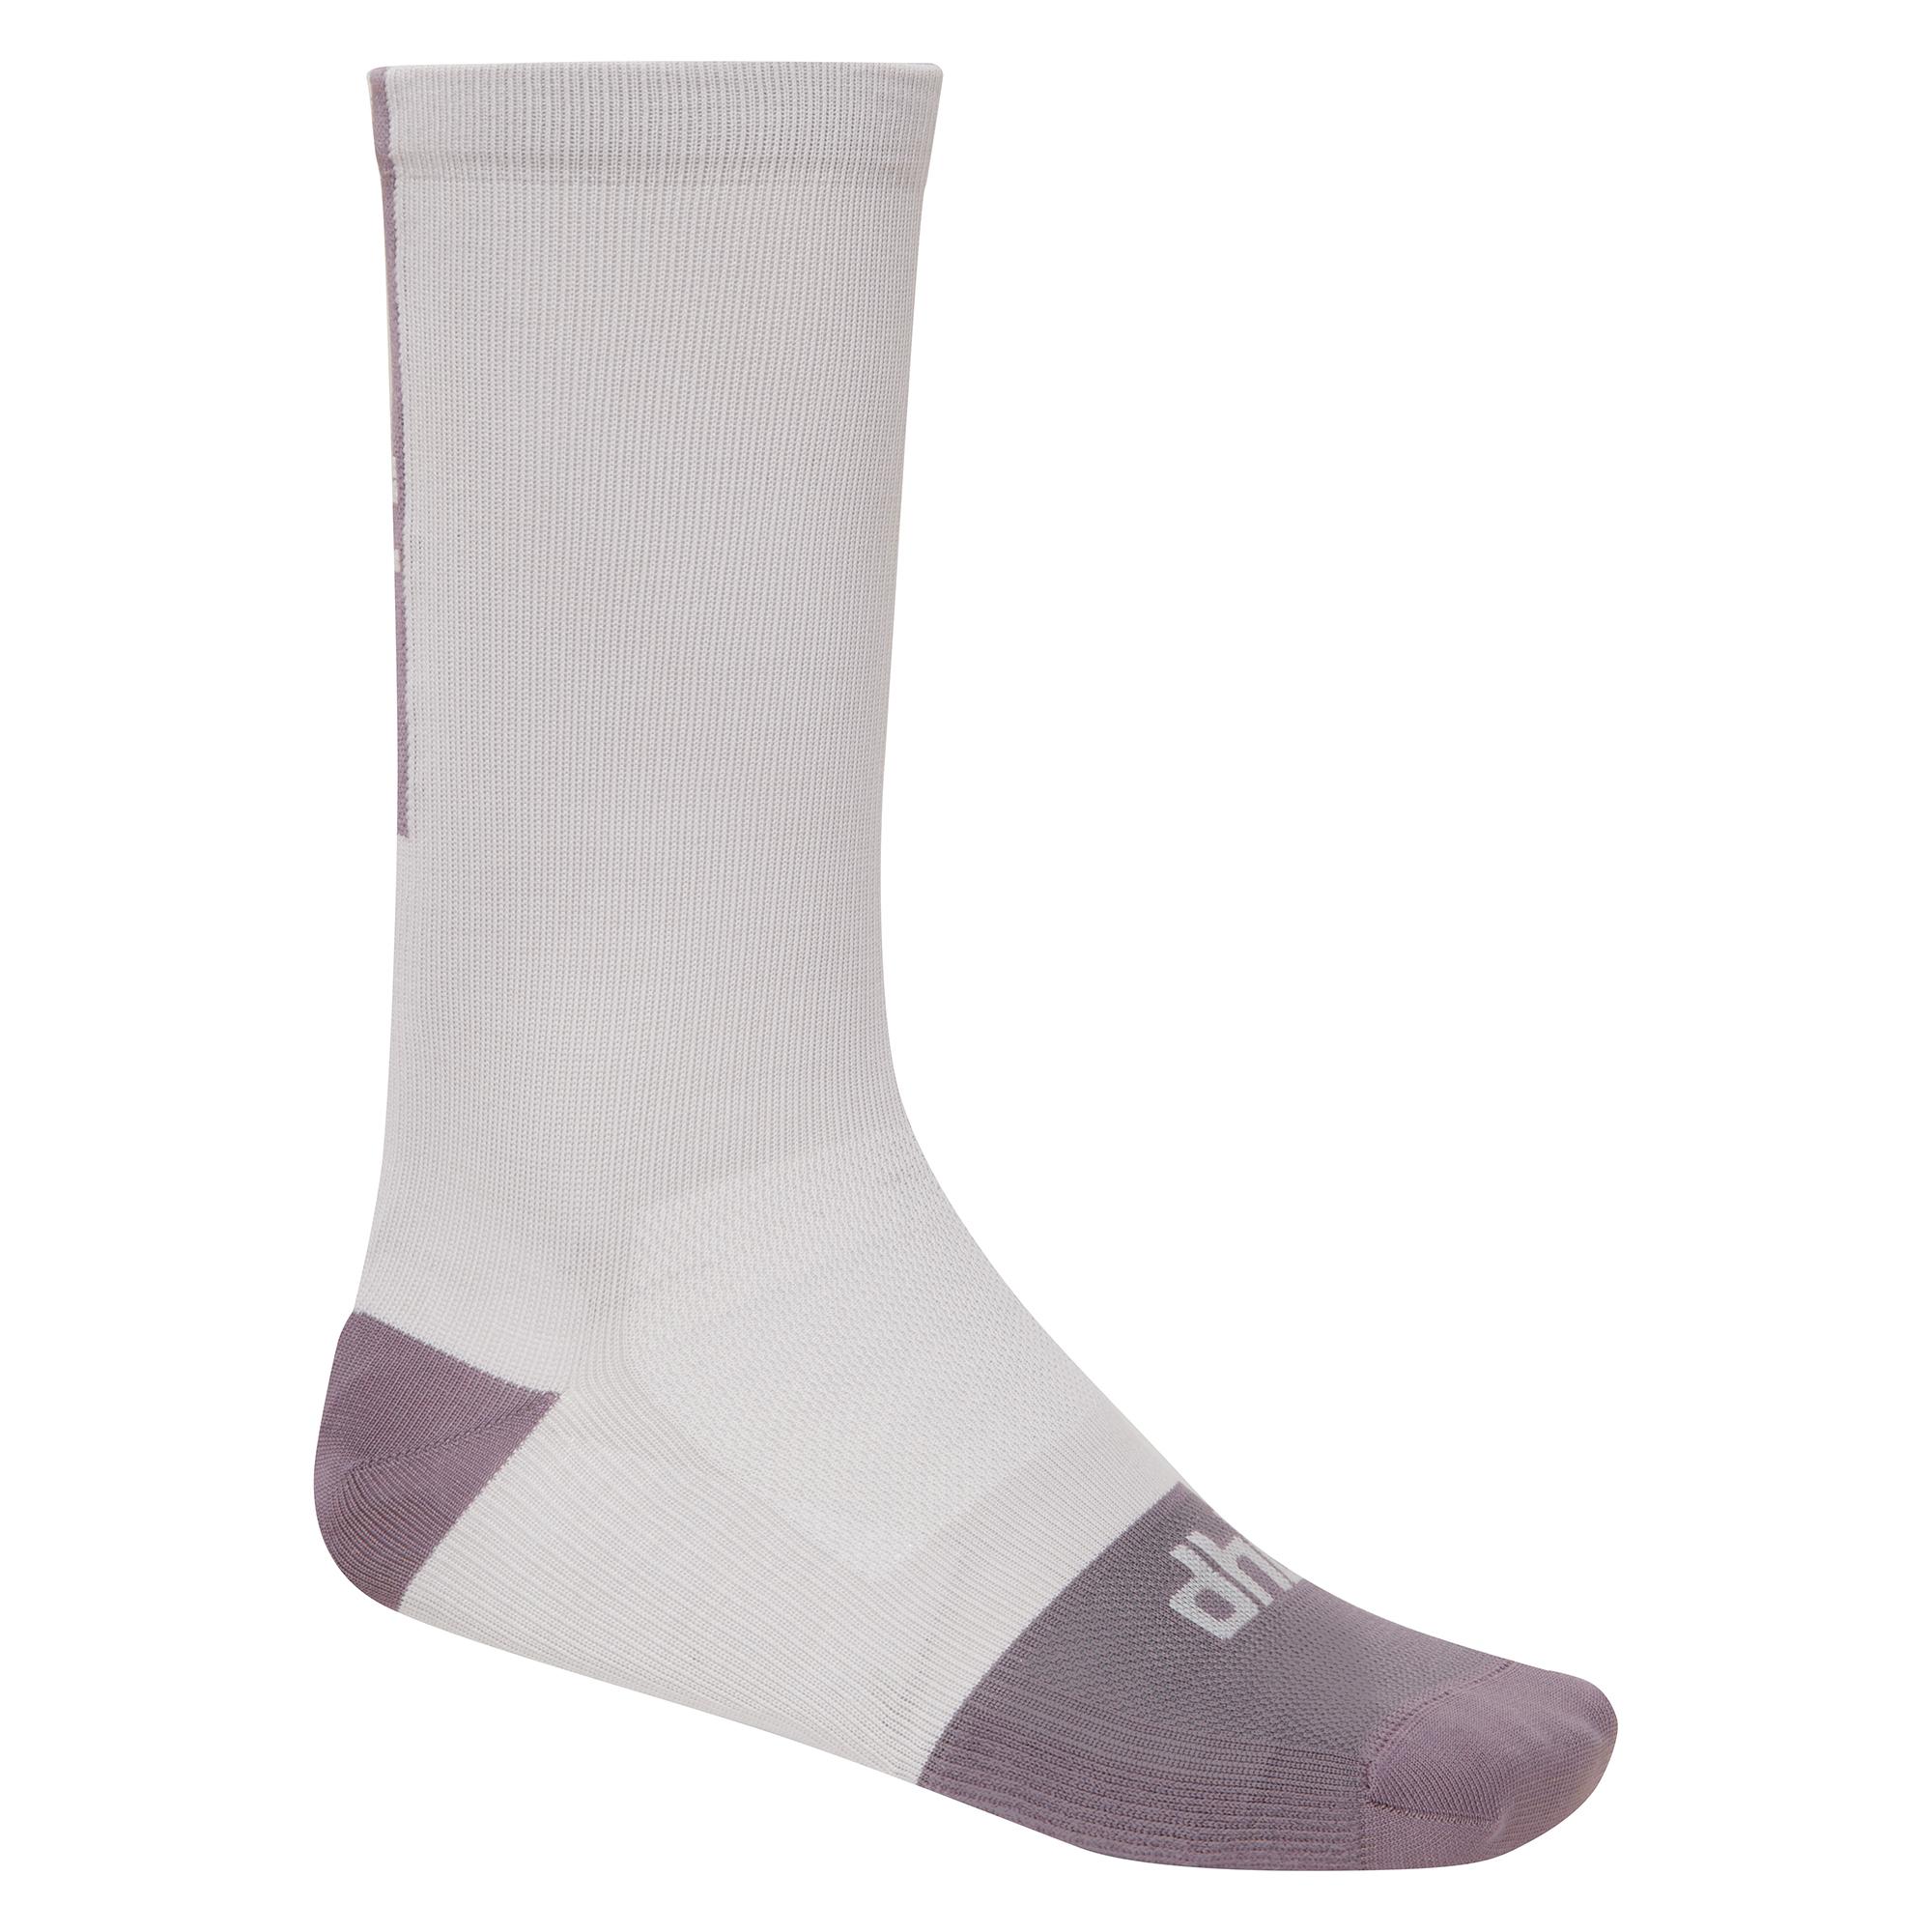 Dhb Aeron Tall Sock  Grey/aubergine